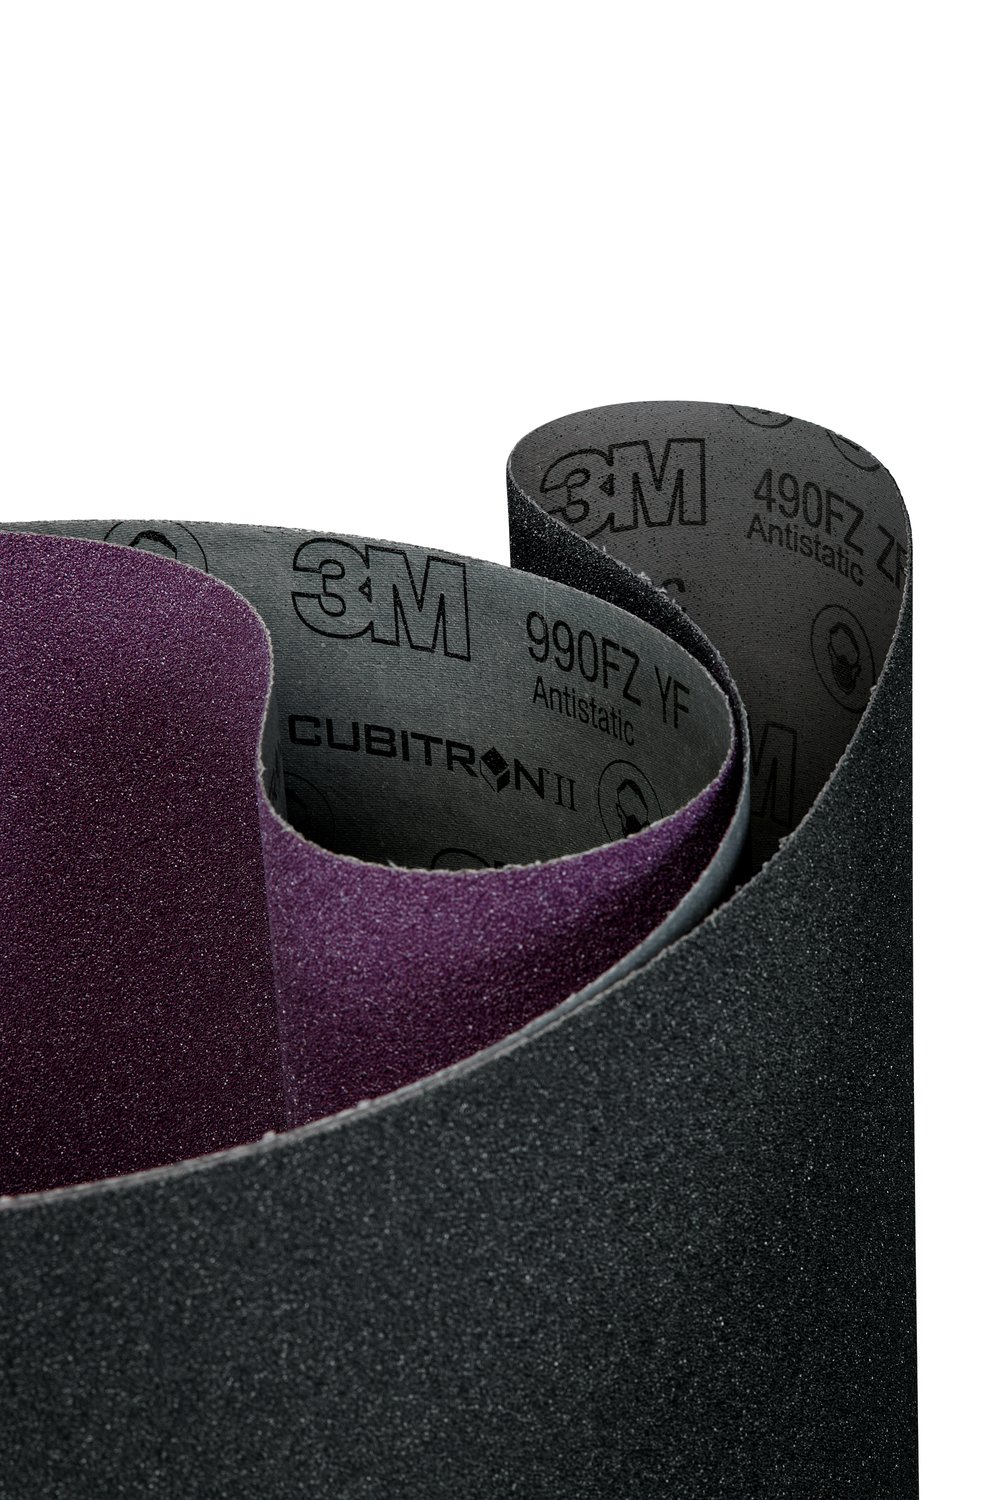 7010511667 - 3M SiC Cloth Belt 490FZ, P40 ZF-weight, 25 in x 75 in, Film-lok,
Single-flex